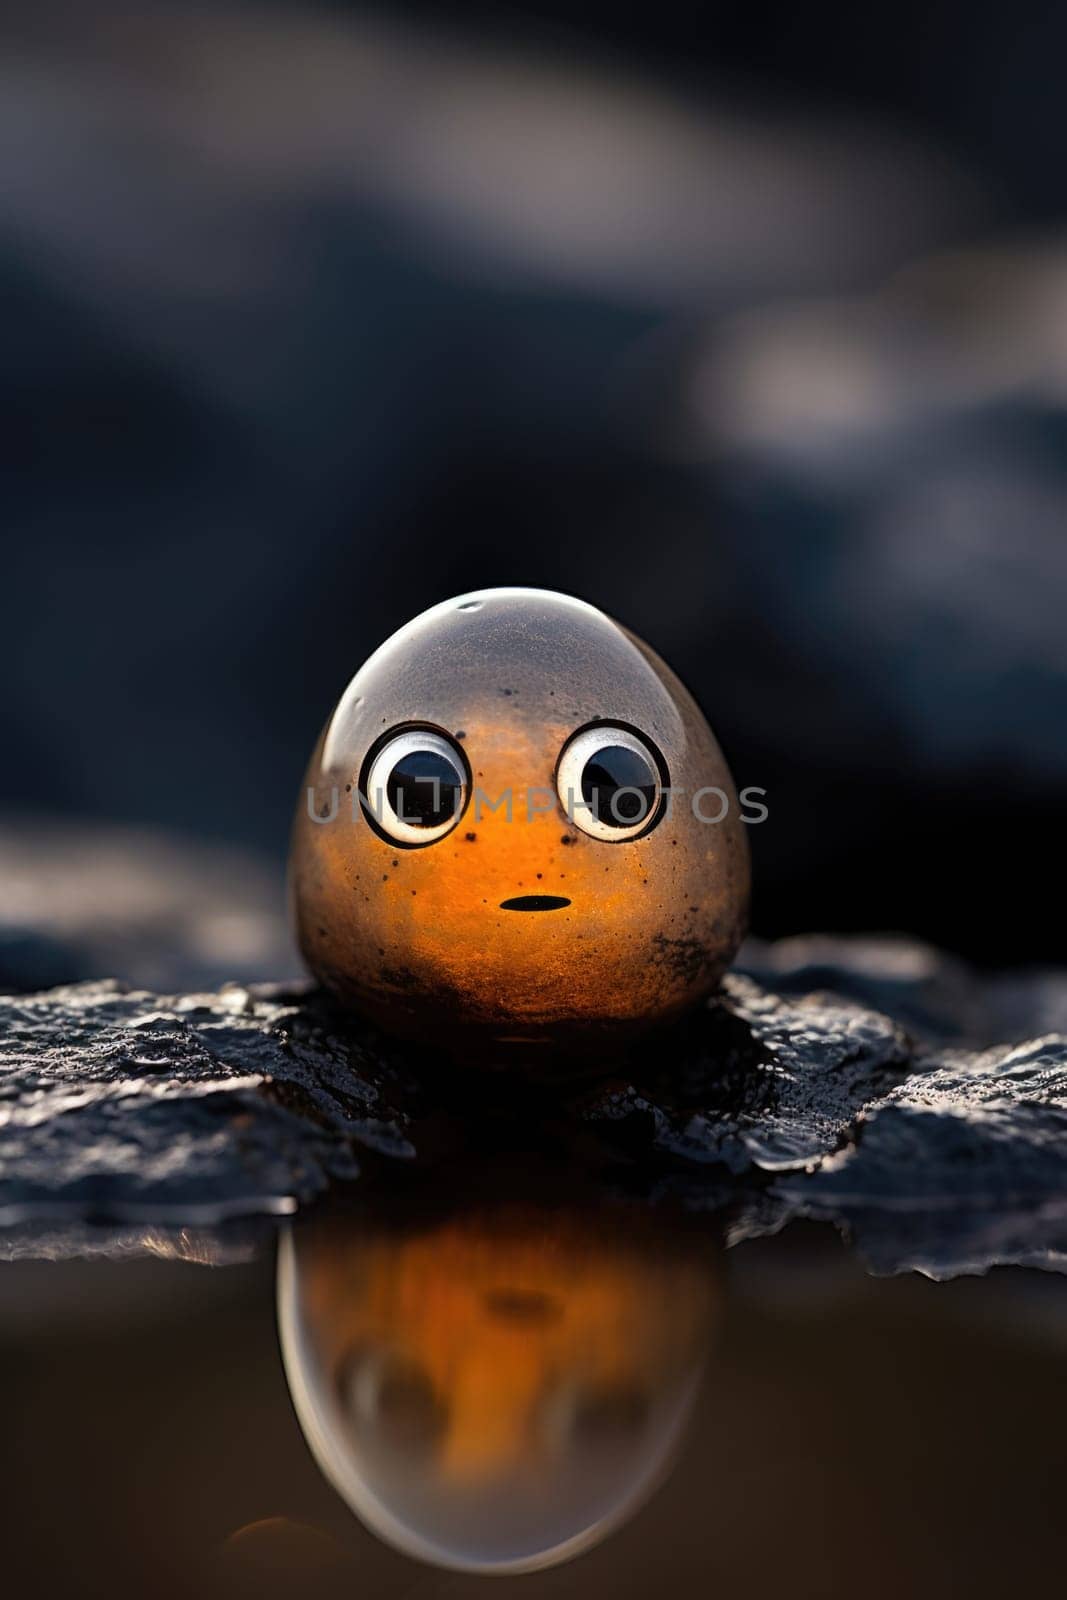 A small orange ball with eyes sitting on a rock. Pareidolia.